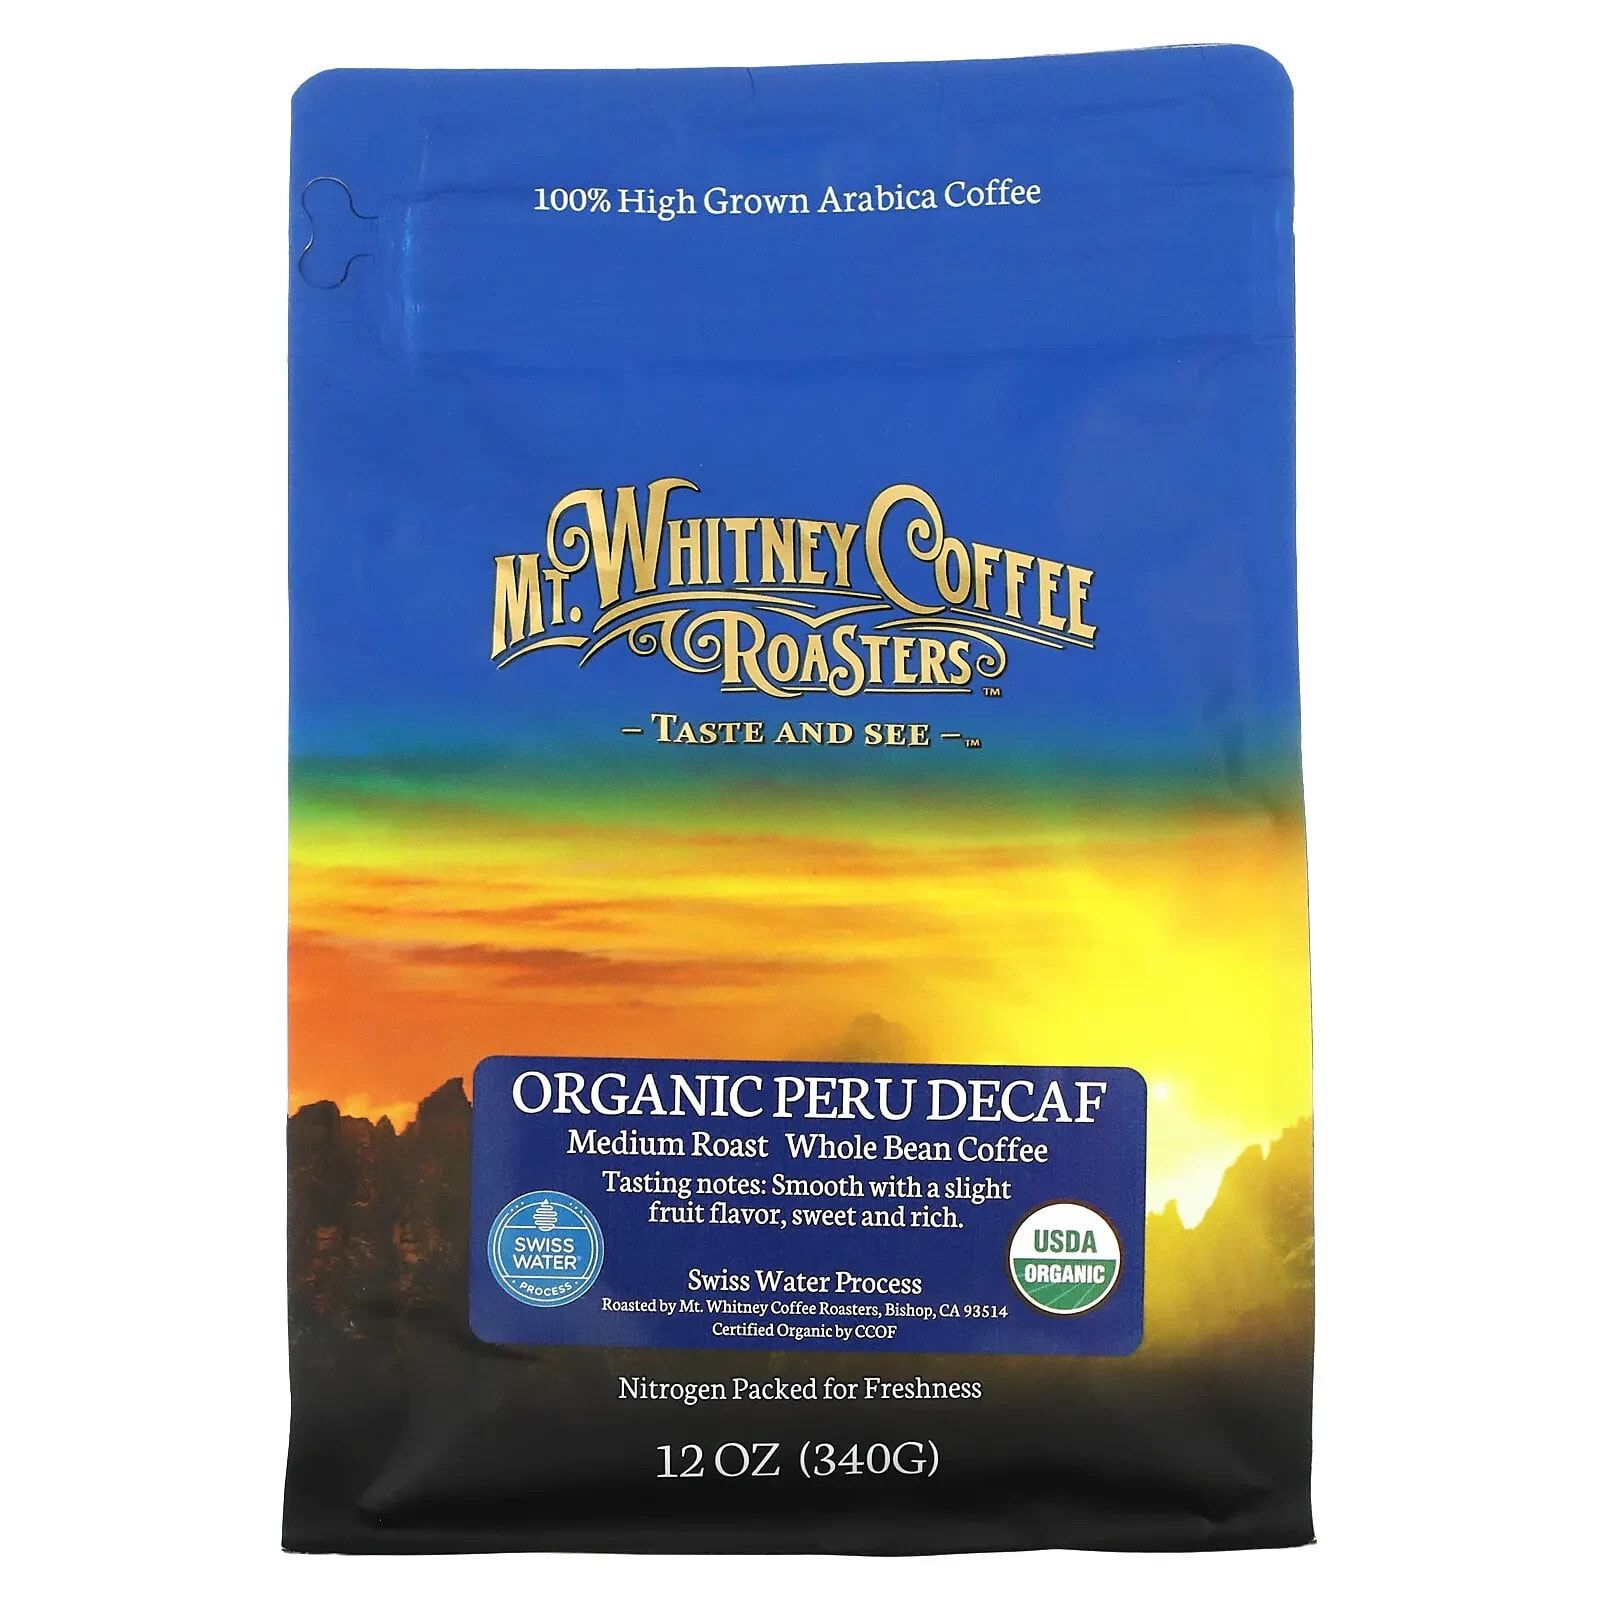 Organic Guatemala Adiesto, Whole Bean Coffee, Medium Roast, 12 oz (340 g)